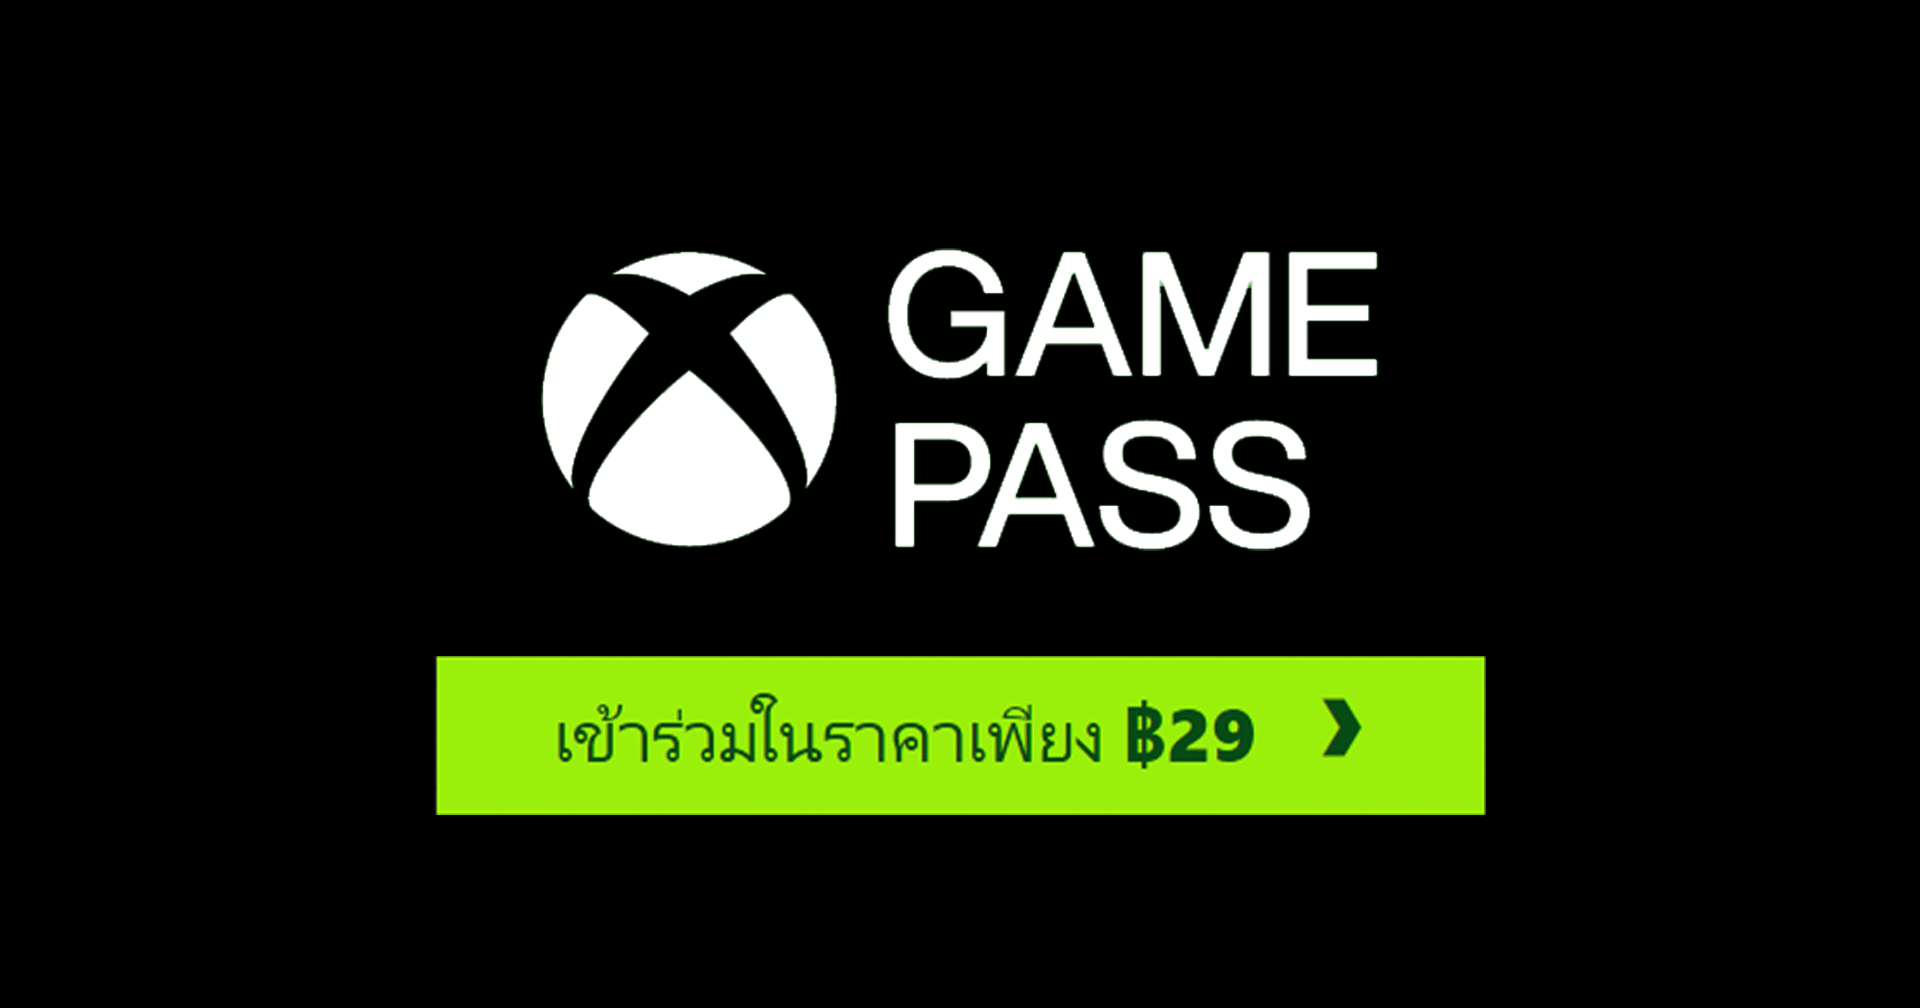 Xbox Game Pass เปิดให้บริการในไทยเต็มรูปแบบ พร้อมโปรโมชันเล่นได้ 3 เดือนในราคา 29 บาท!!